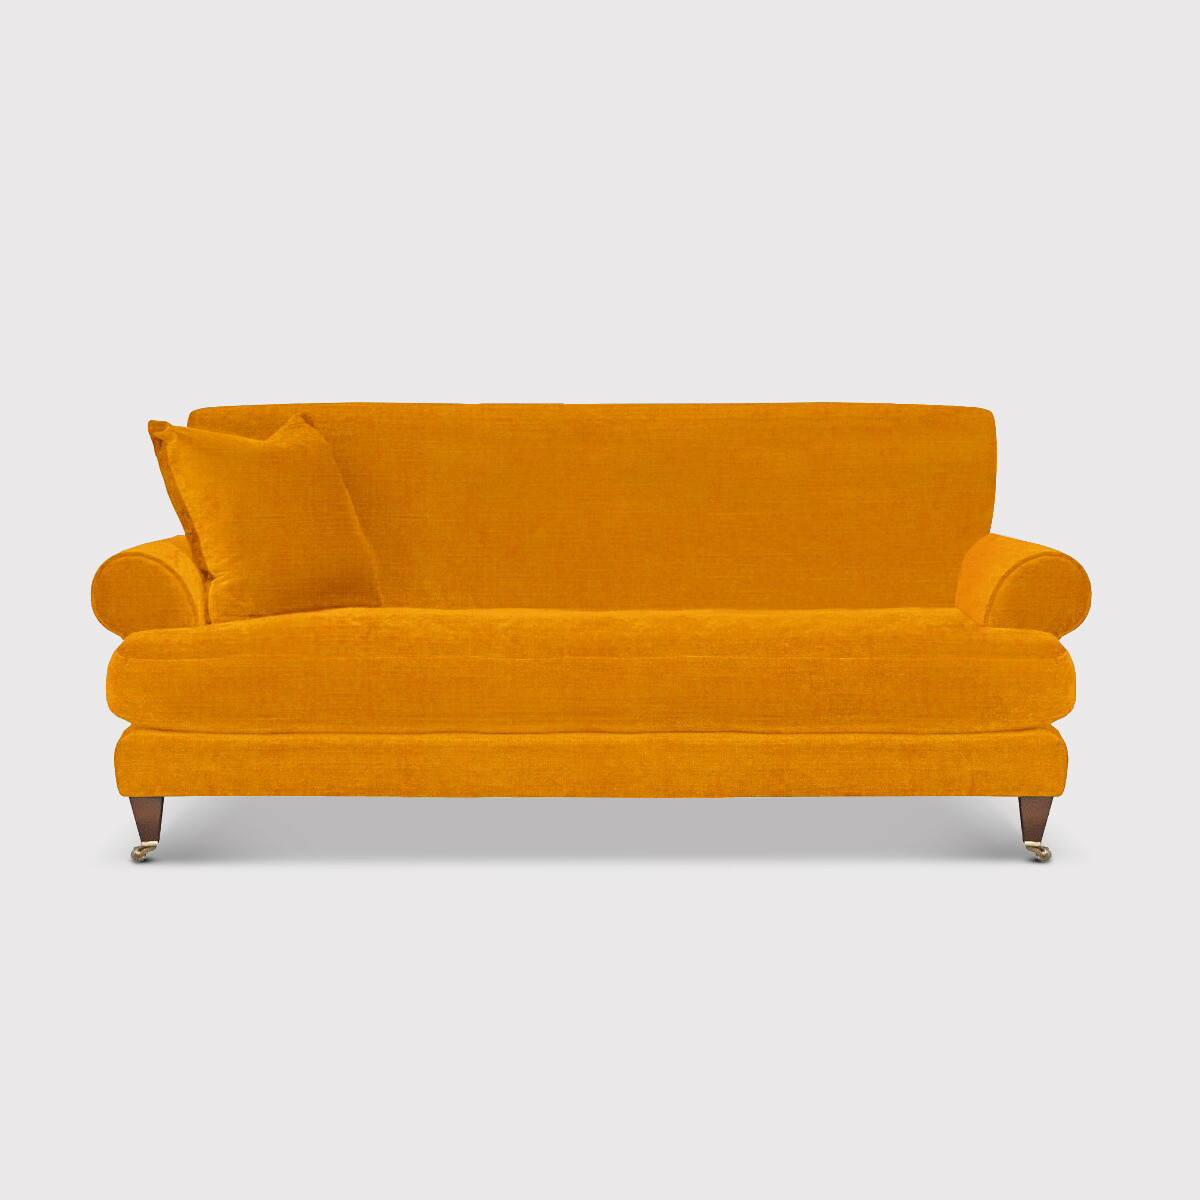 Fairlawn 2 Seater Sofa, Yellow Fabric | Barker & Stonehouse